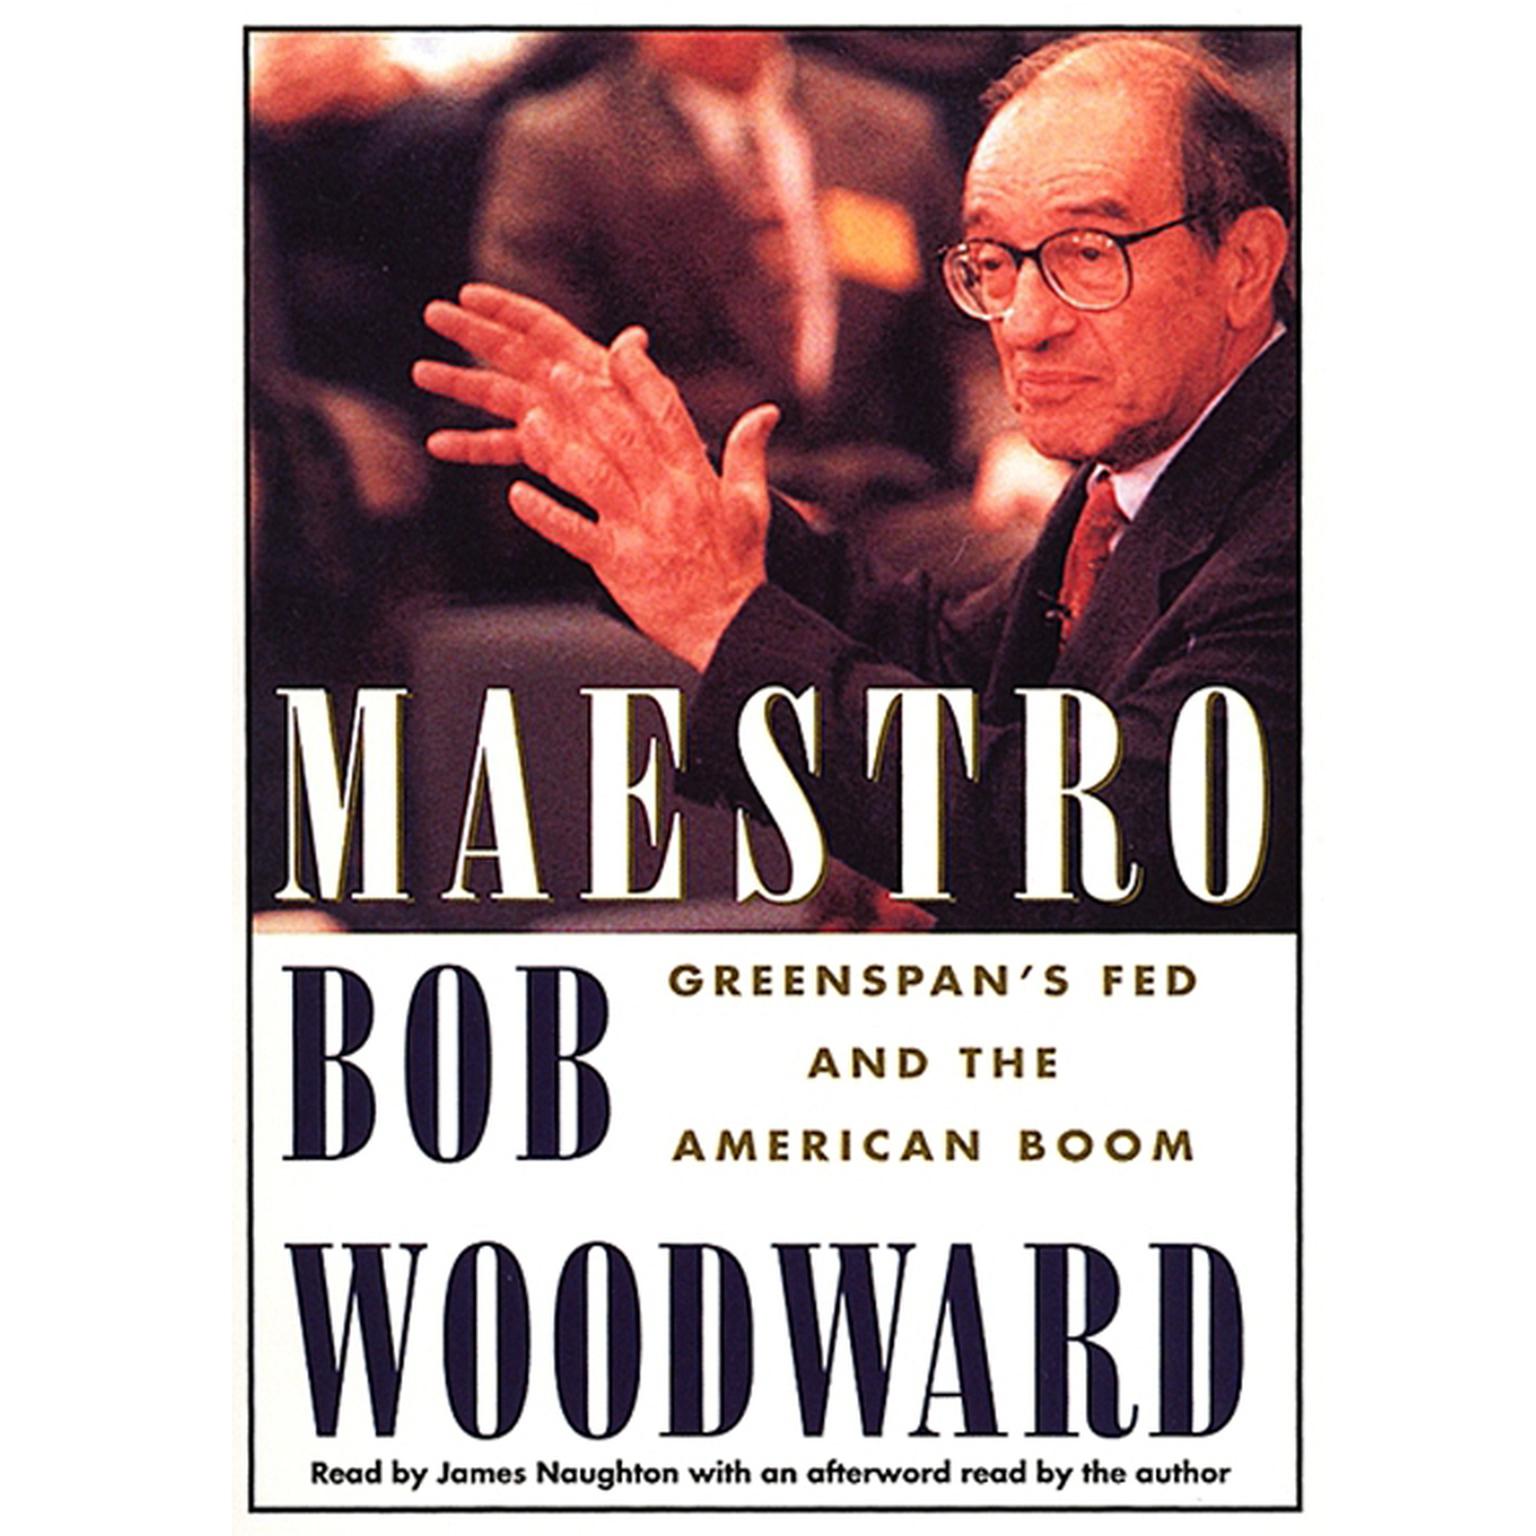 Maestro (Abridged): Greenspan’s Fed And The American Boom Audiobook, by Bob Woodward